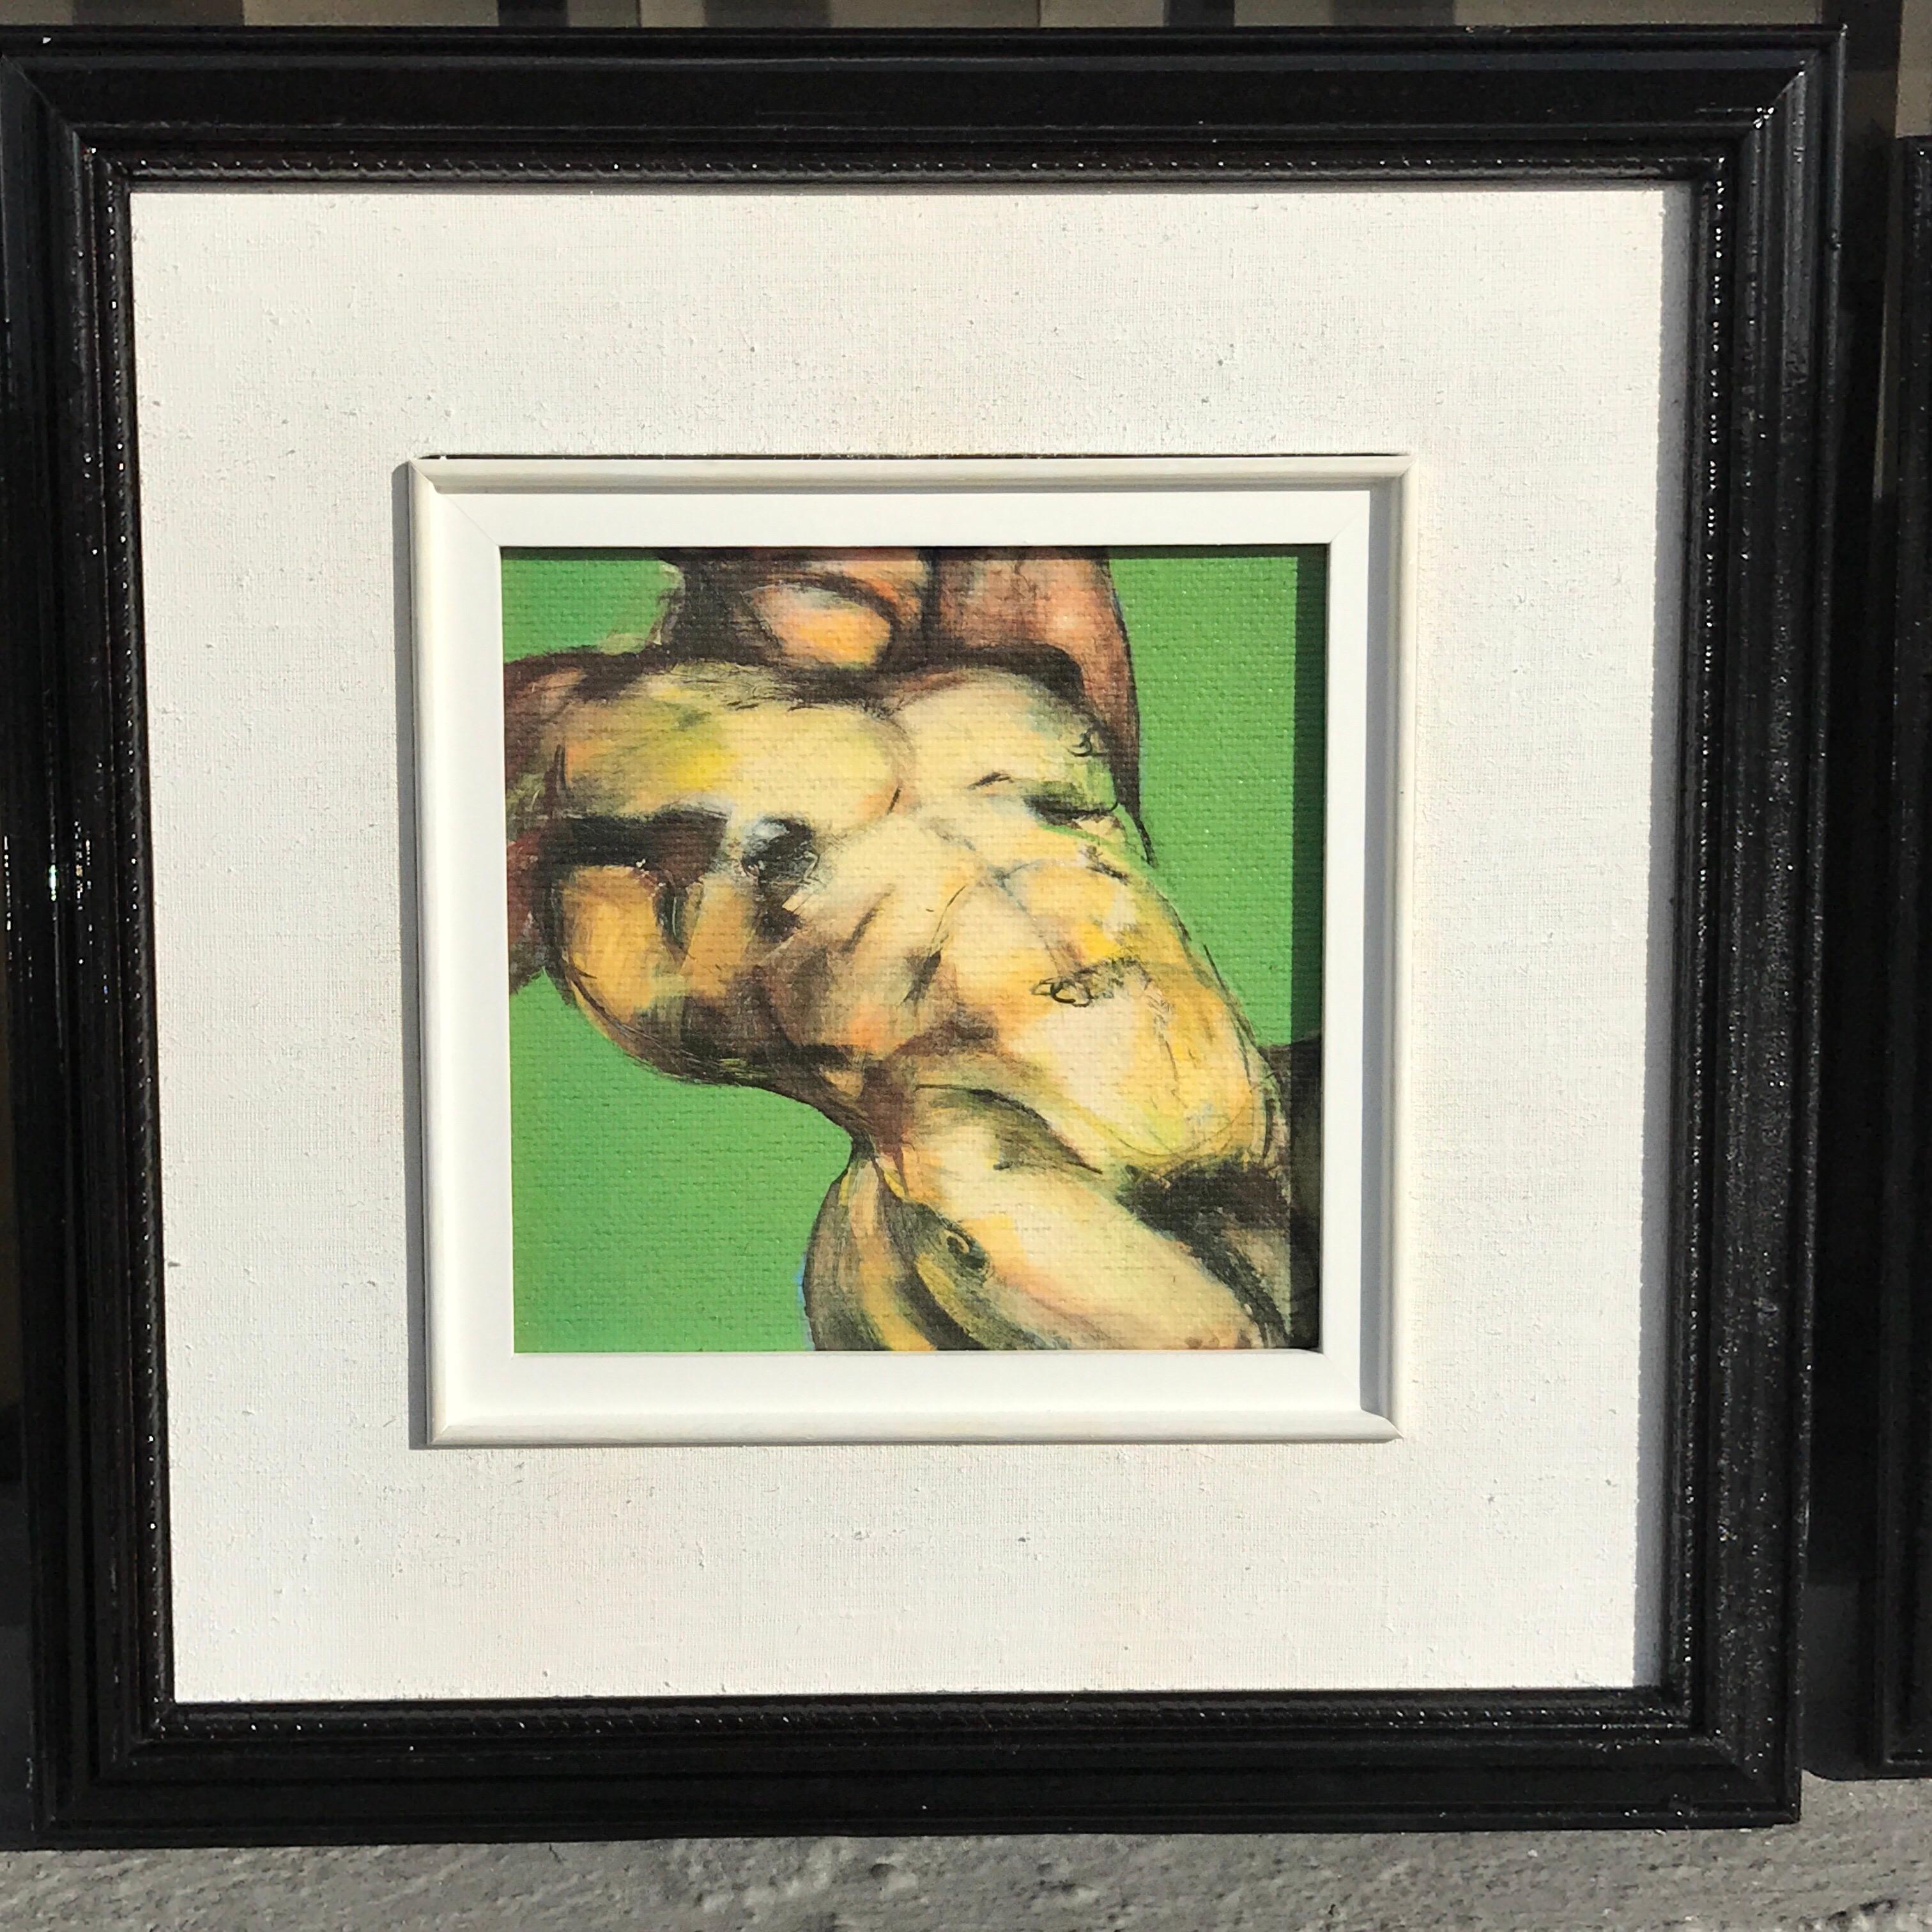 Two diminutive Giclee male nude studies Johanne Corno
Johanne Corno, Canadian (1952-2016).
Giclee on artist board
Green background Image 6.5